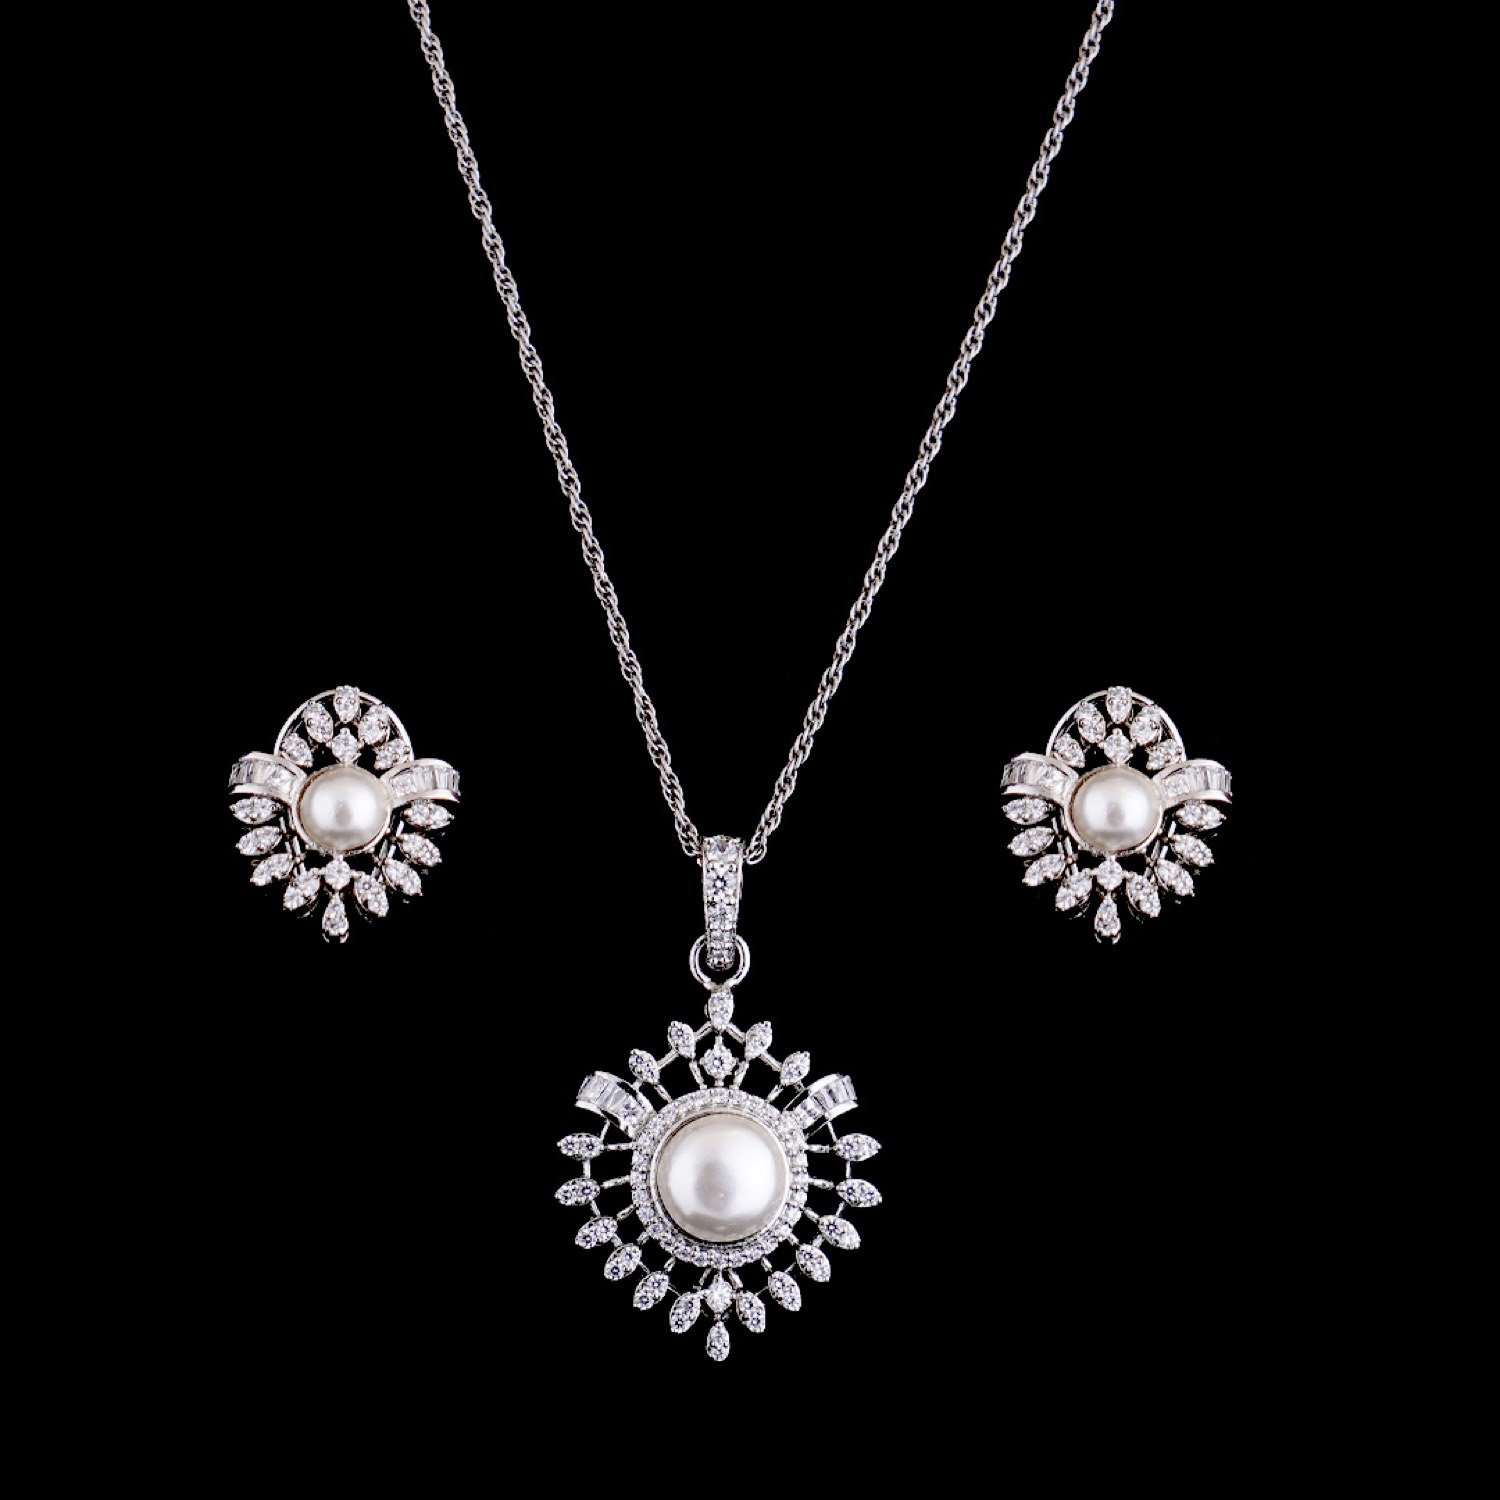 varam_swarovski_white_pearl_pendant_silver_chain_with_earrings_1-1